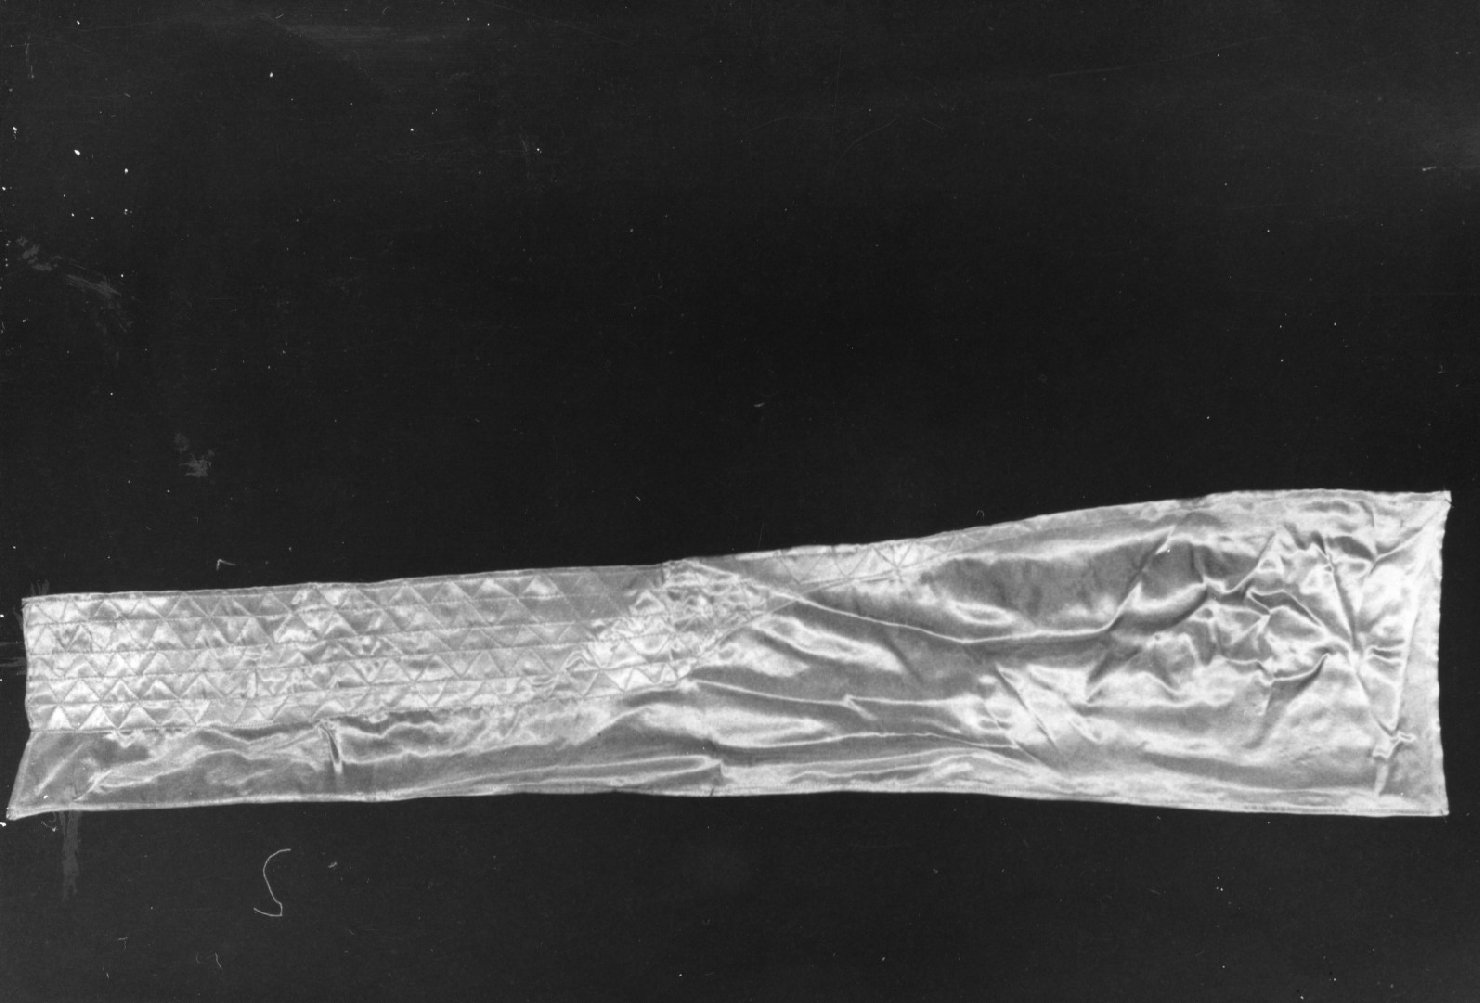 copricapo, costume femminile - manifattura sarda (sec. XIX)